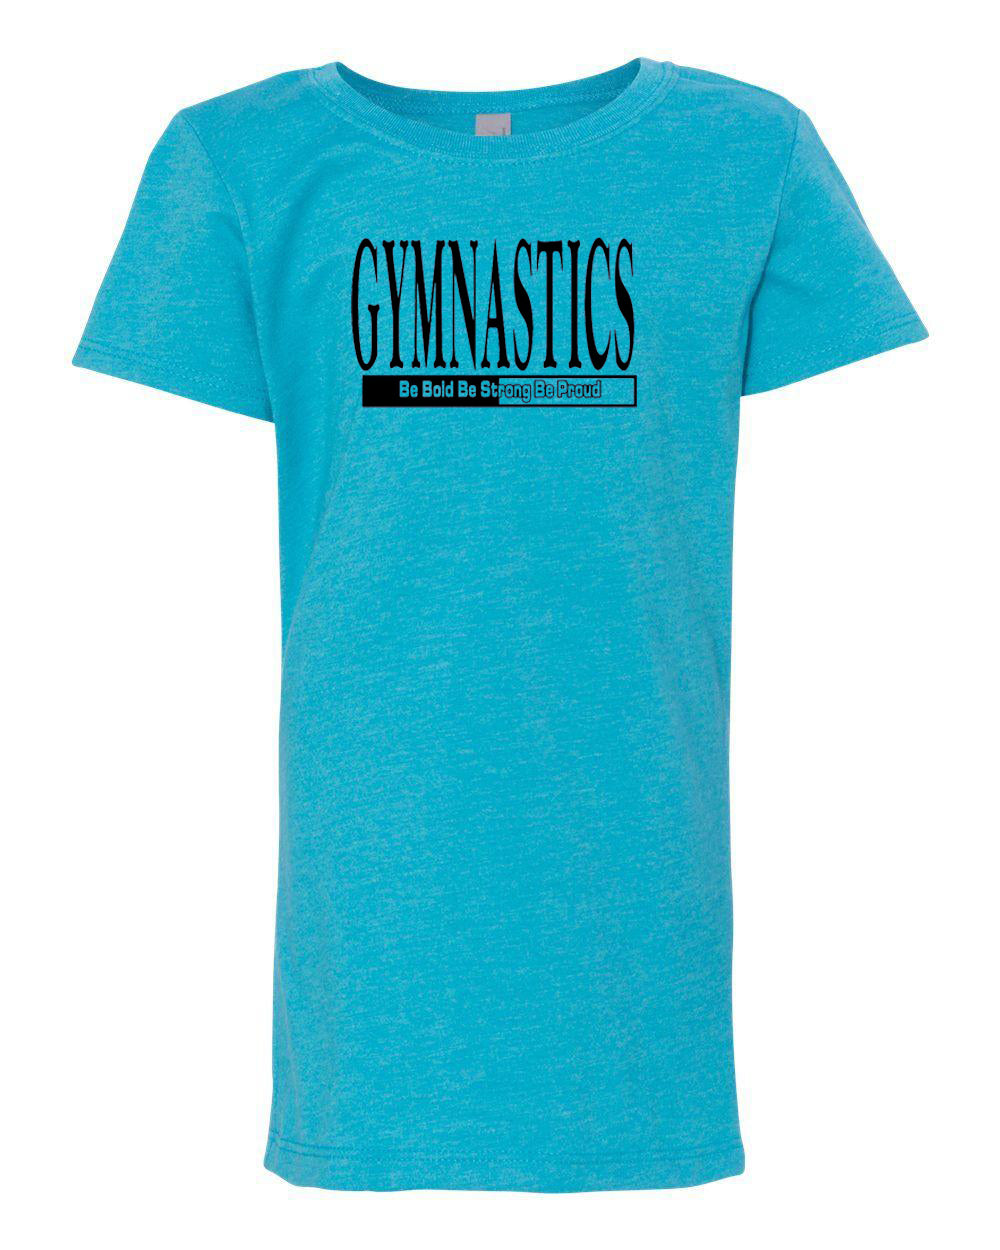 Gymnastics Be Bold Be Strong Be Proud Girls T-Shirt Ocean Blue